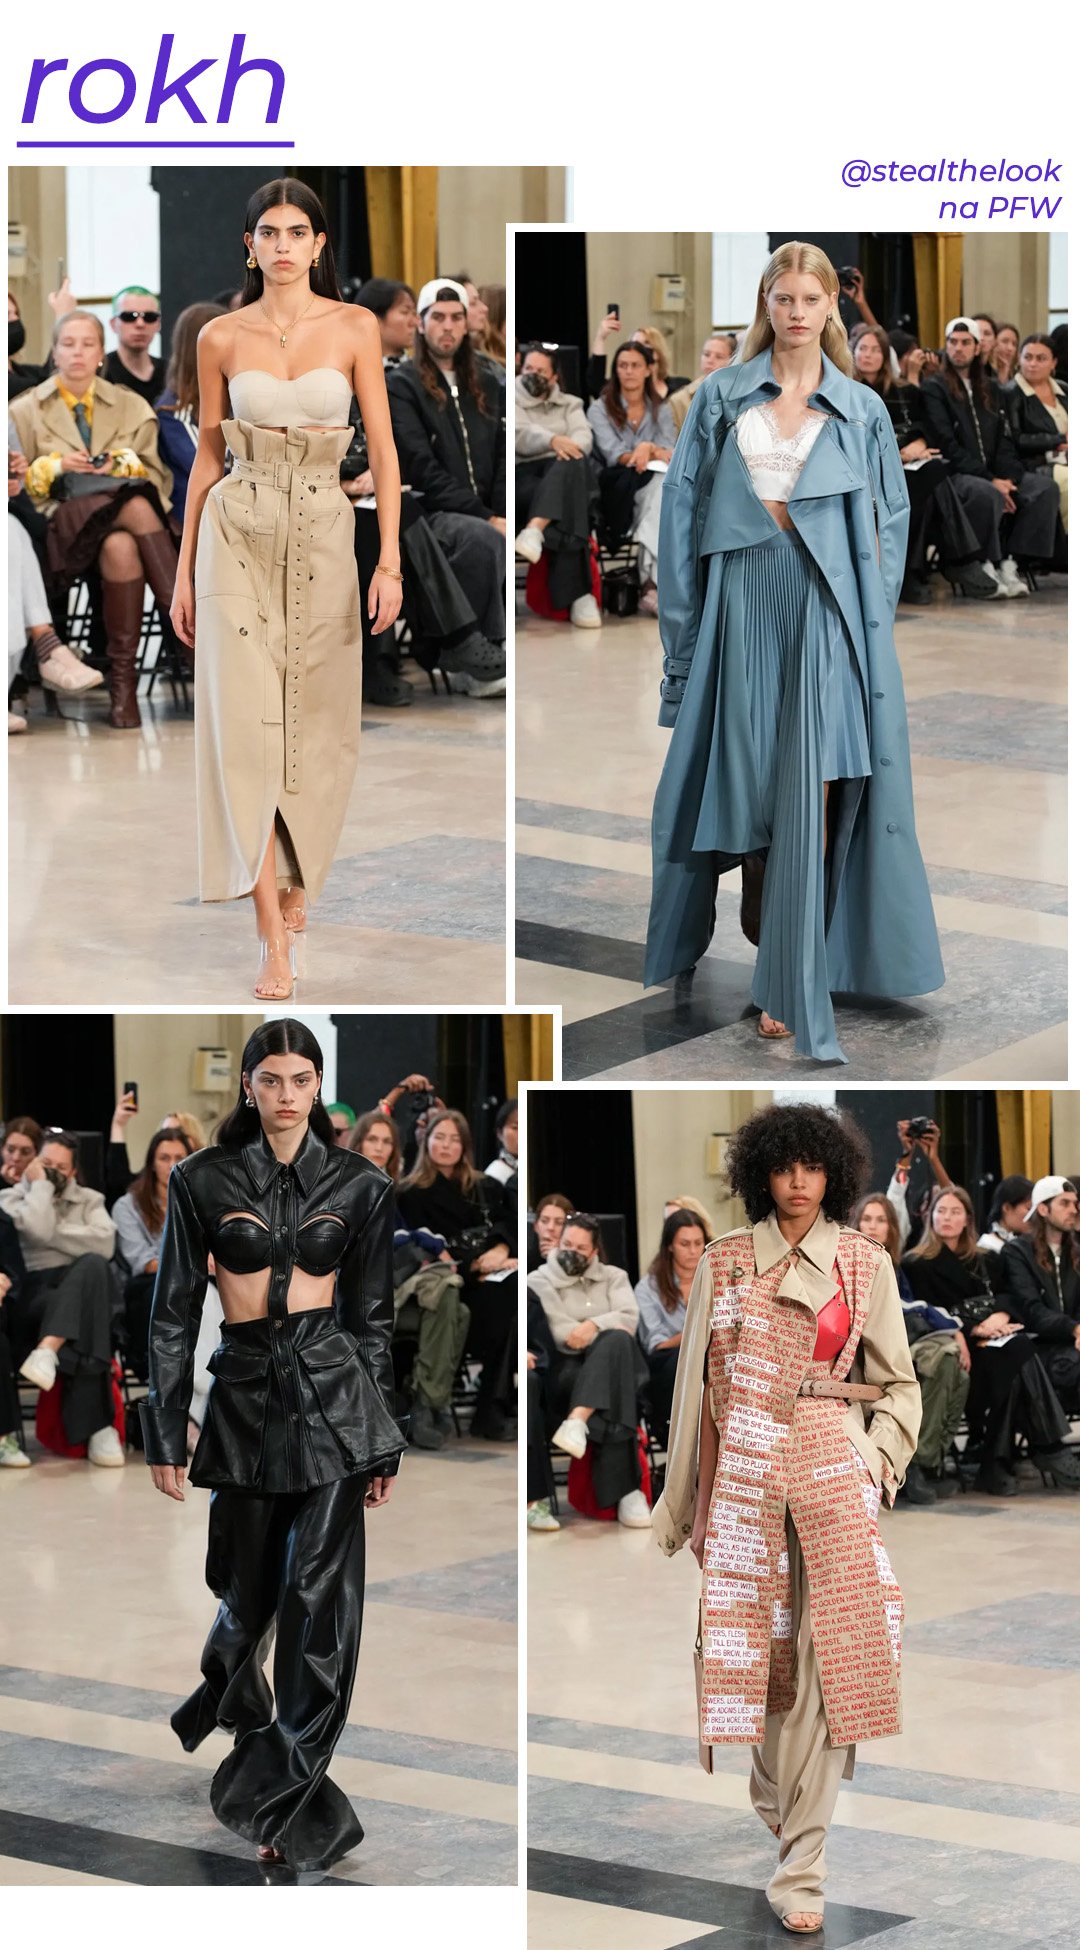 Rokh S/S 2023 - roupas diversas - Paris Fashion Week - Primavera - modelo andando pela passarela - https://stealthelook.com.br